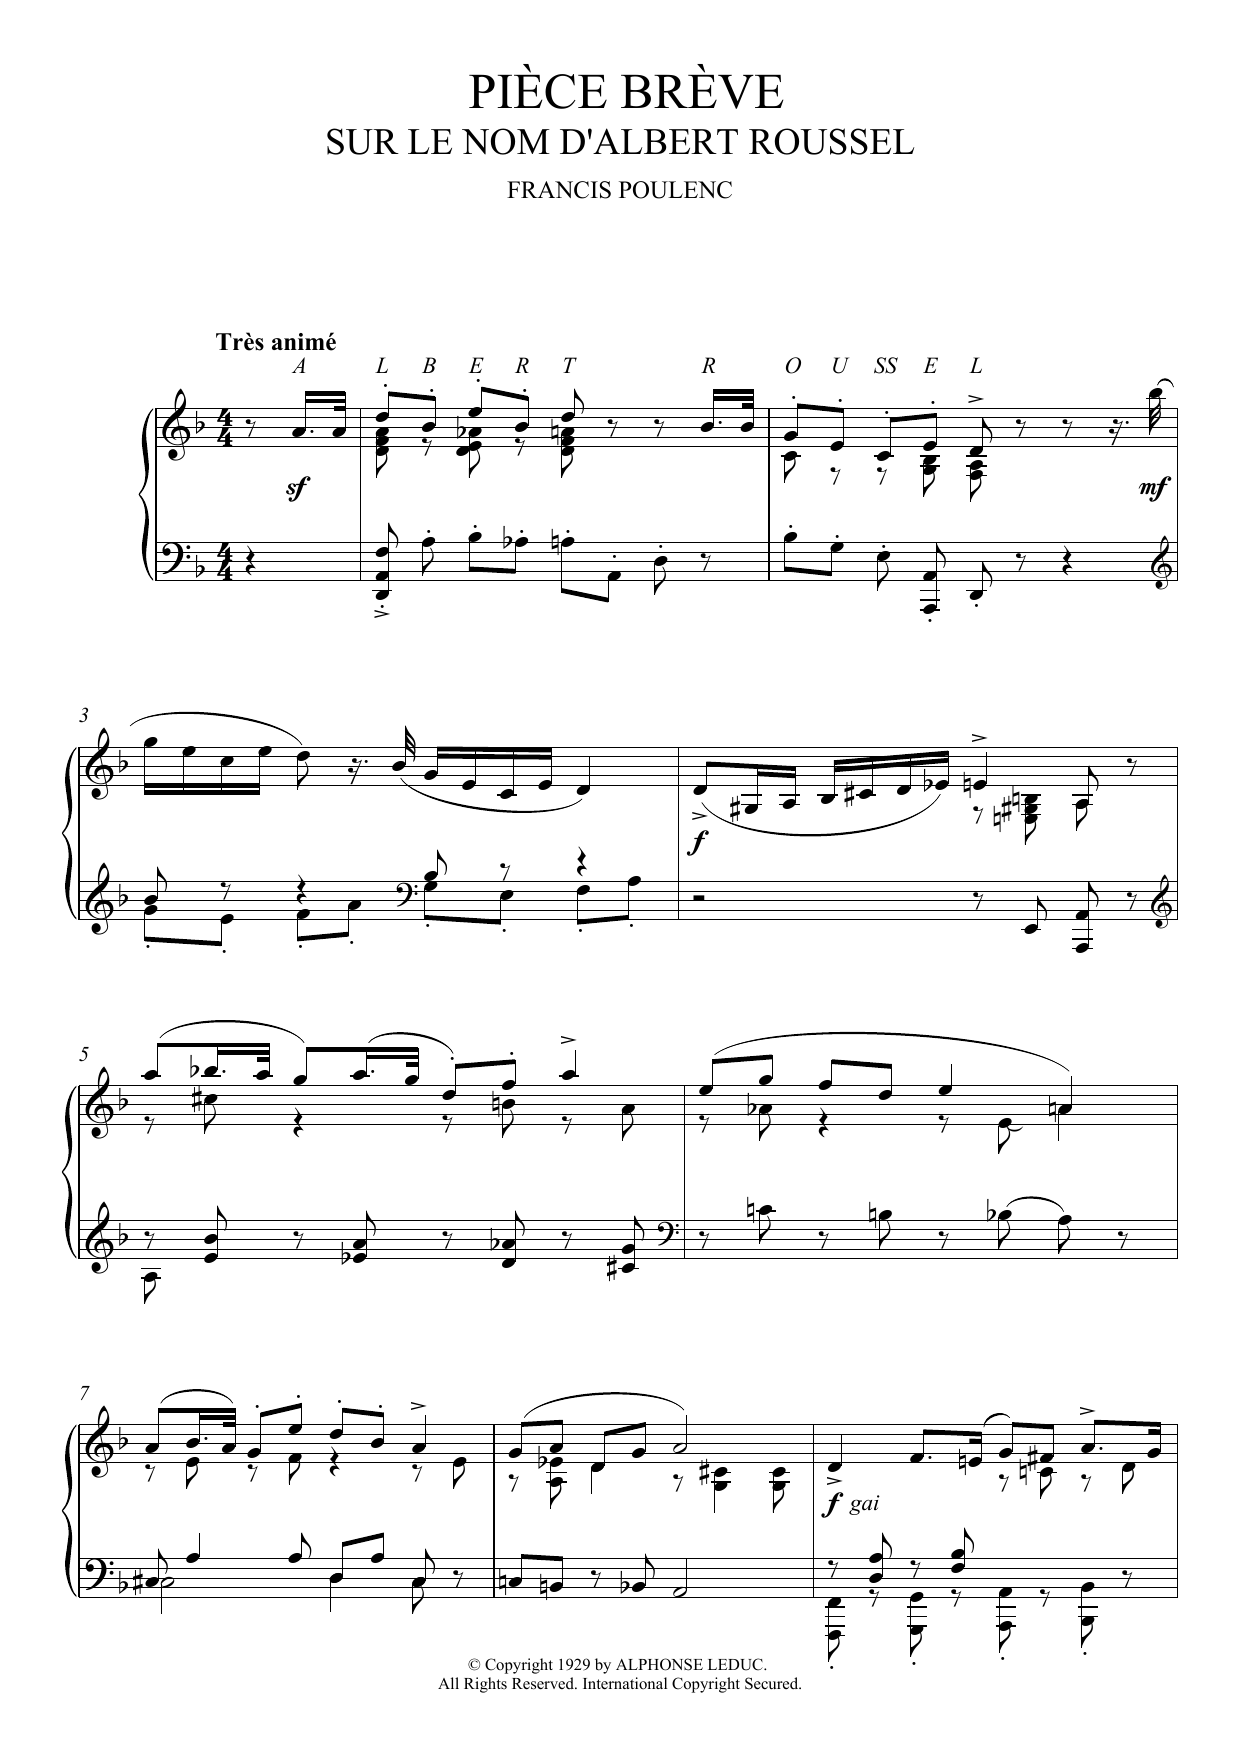 Francis Poulenc Piece Breve Sur Le Nom D'Albert Roussel sheet music notes and chords arranged for Piano Solo